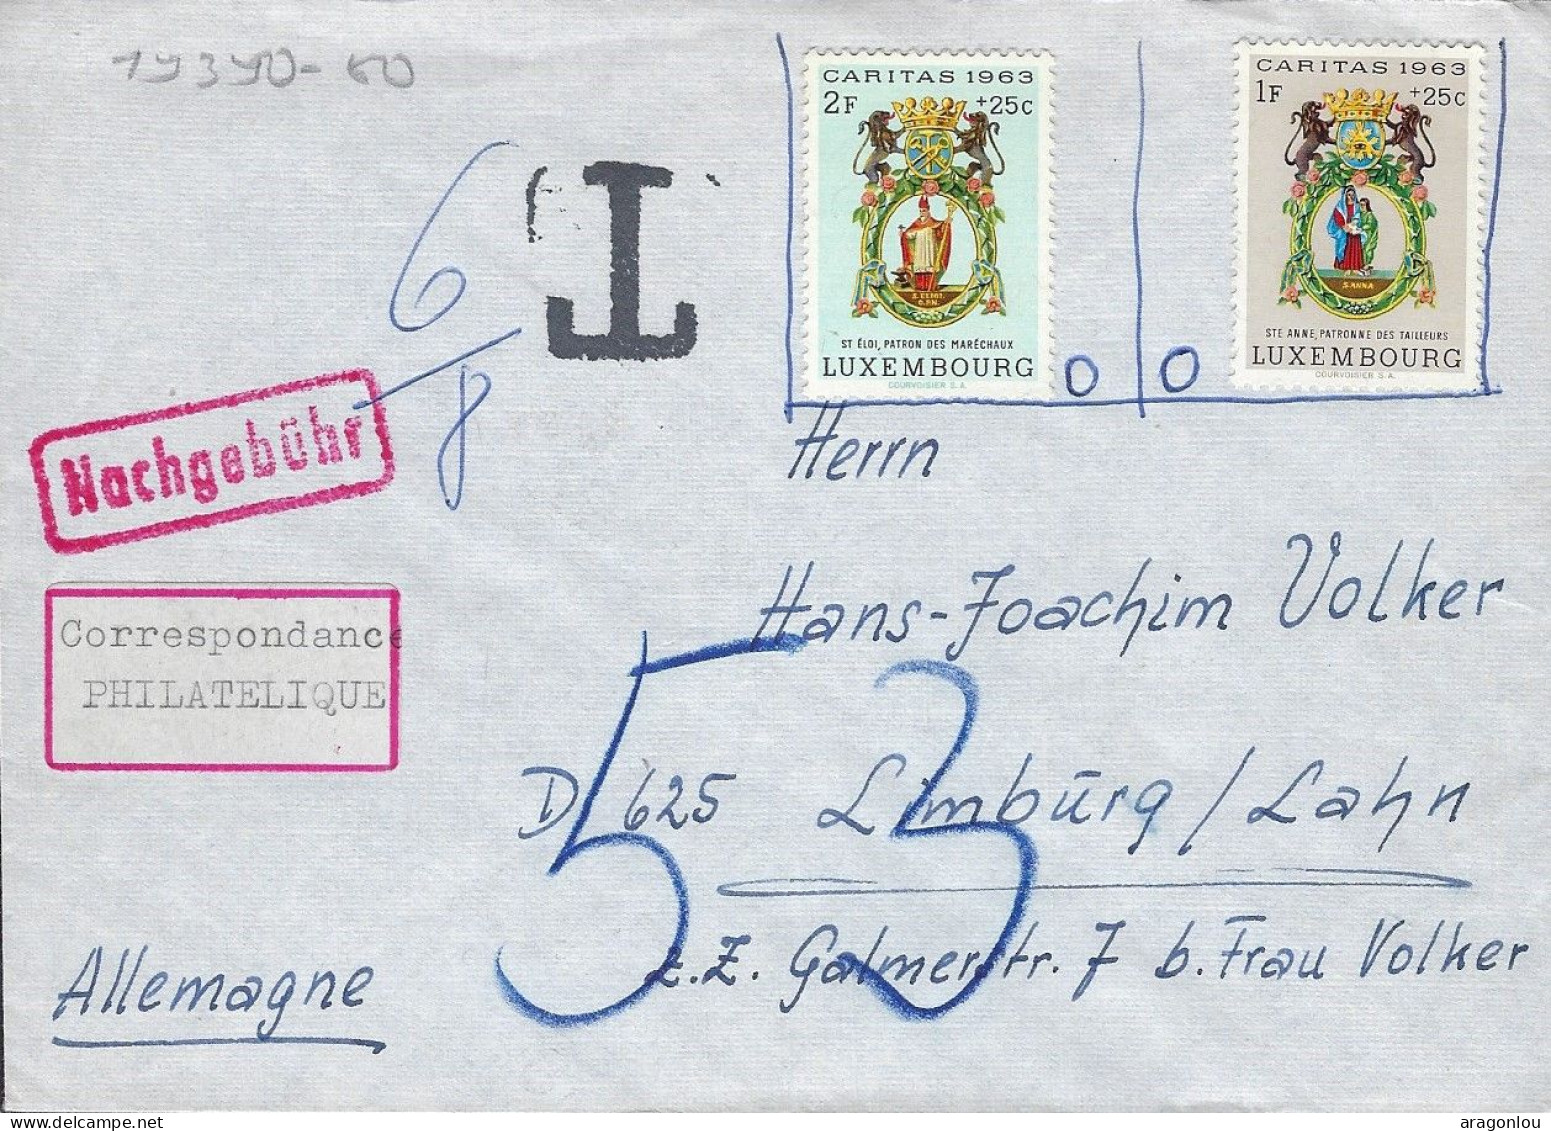 Luxembourg - Luxemburg - Lettre   Taxes  1963  Nachgebühr     Adressiert An Herrn Joachim Volker , Limburg / Lahn - Portomarken